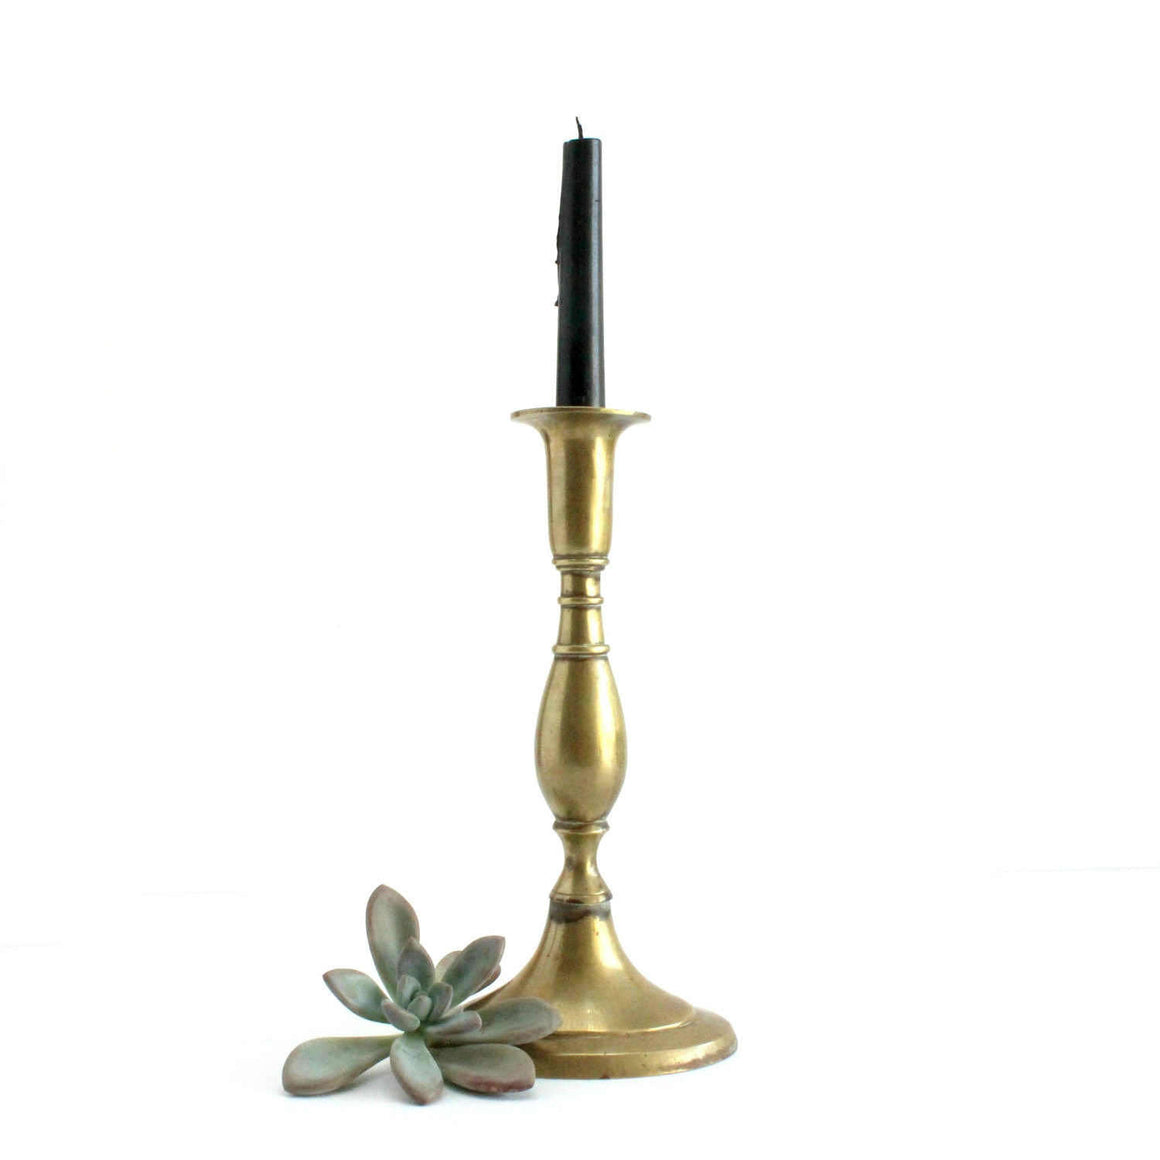 Brass Candlestick Holder With Oval Base, Centerpiece, Mantel Decor